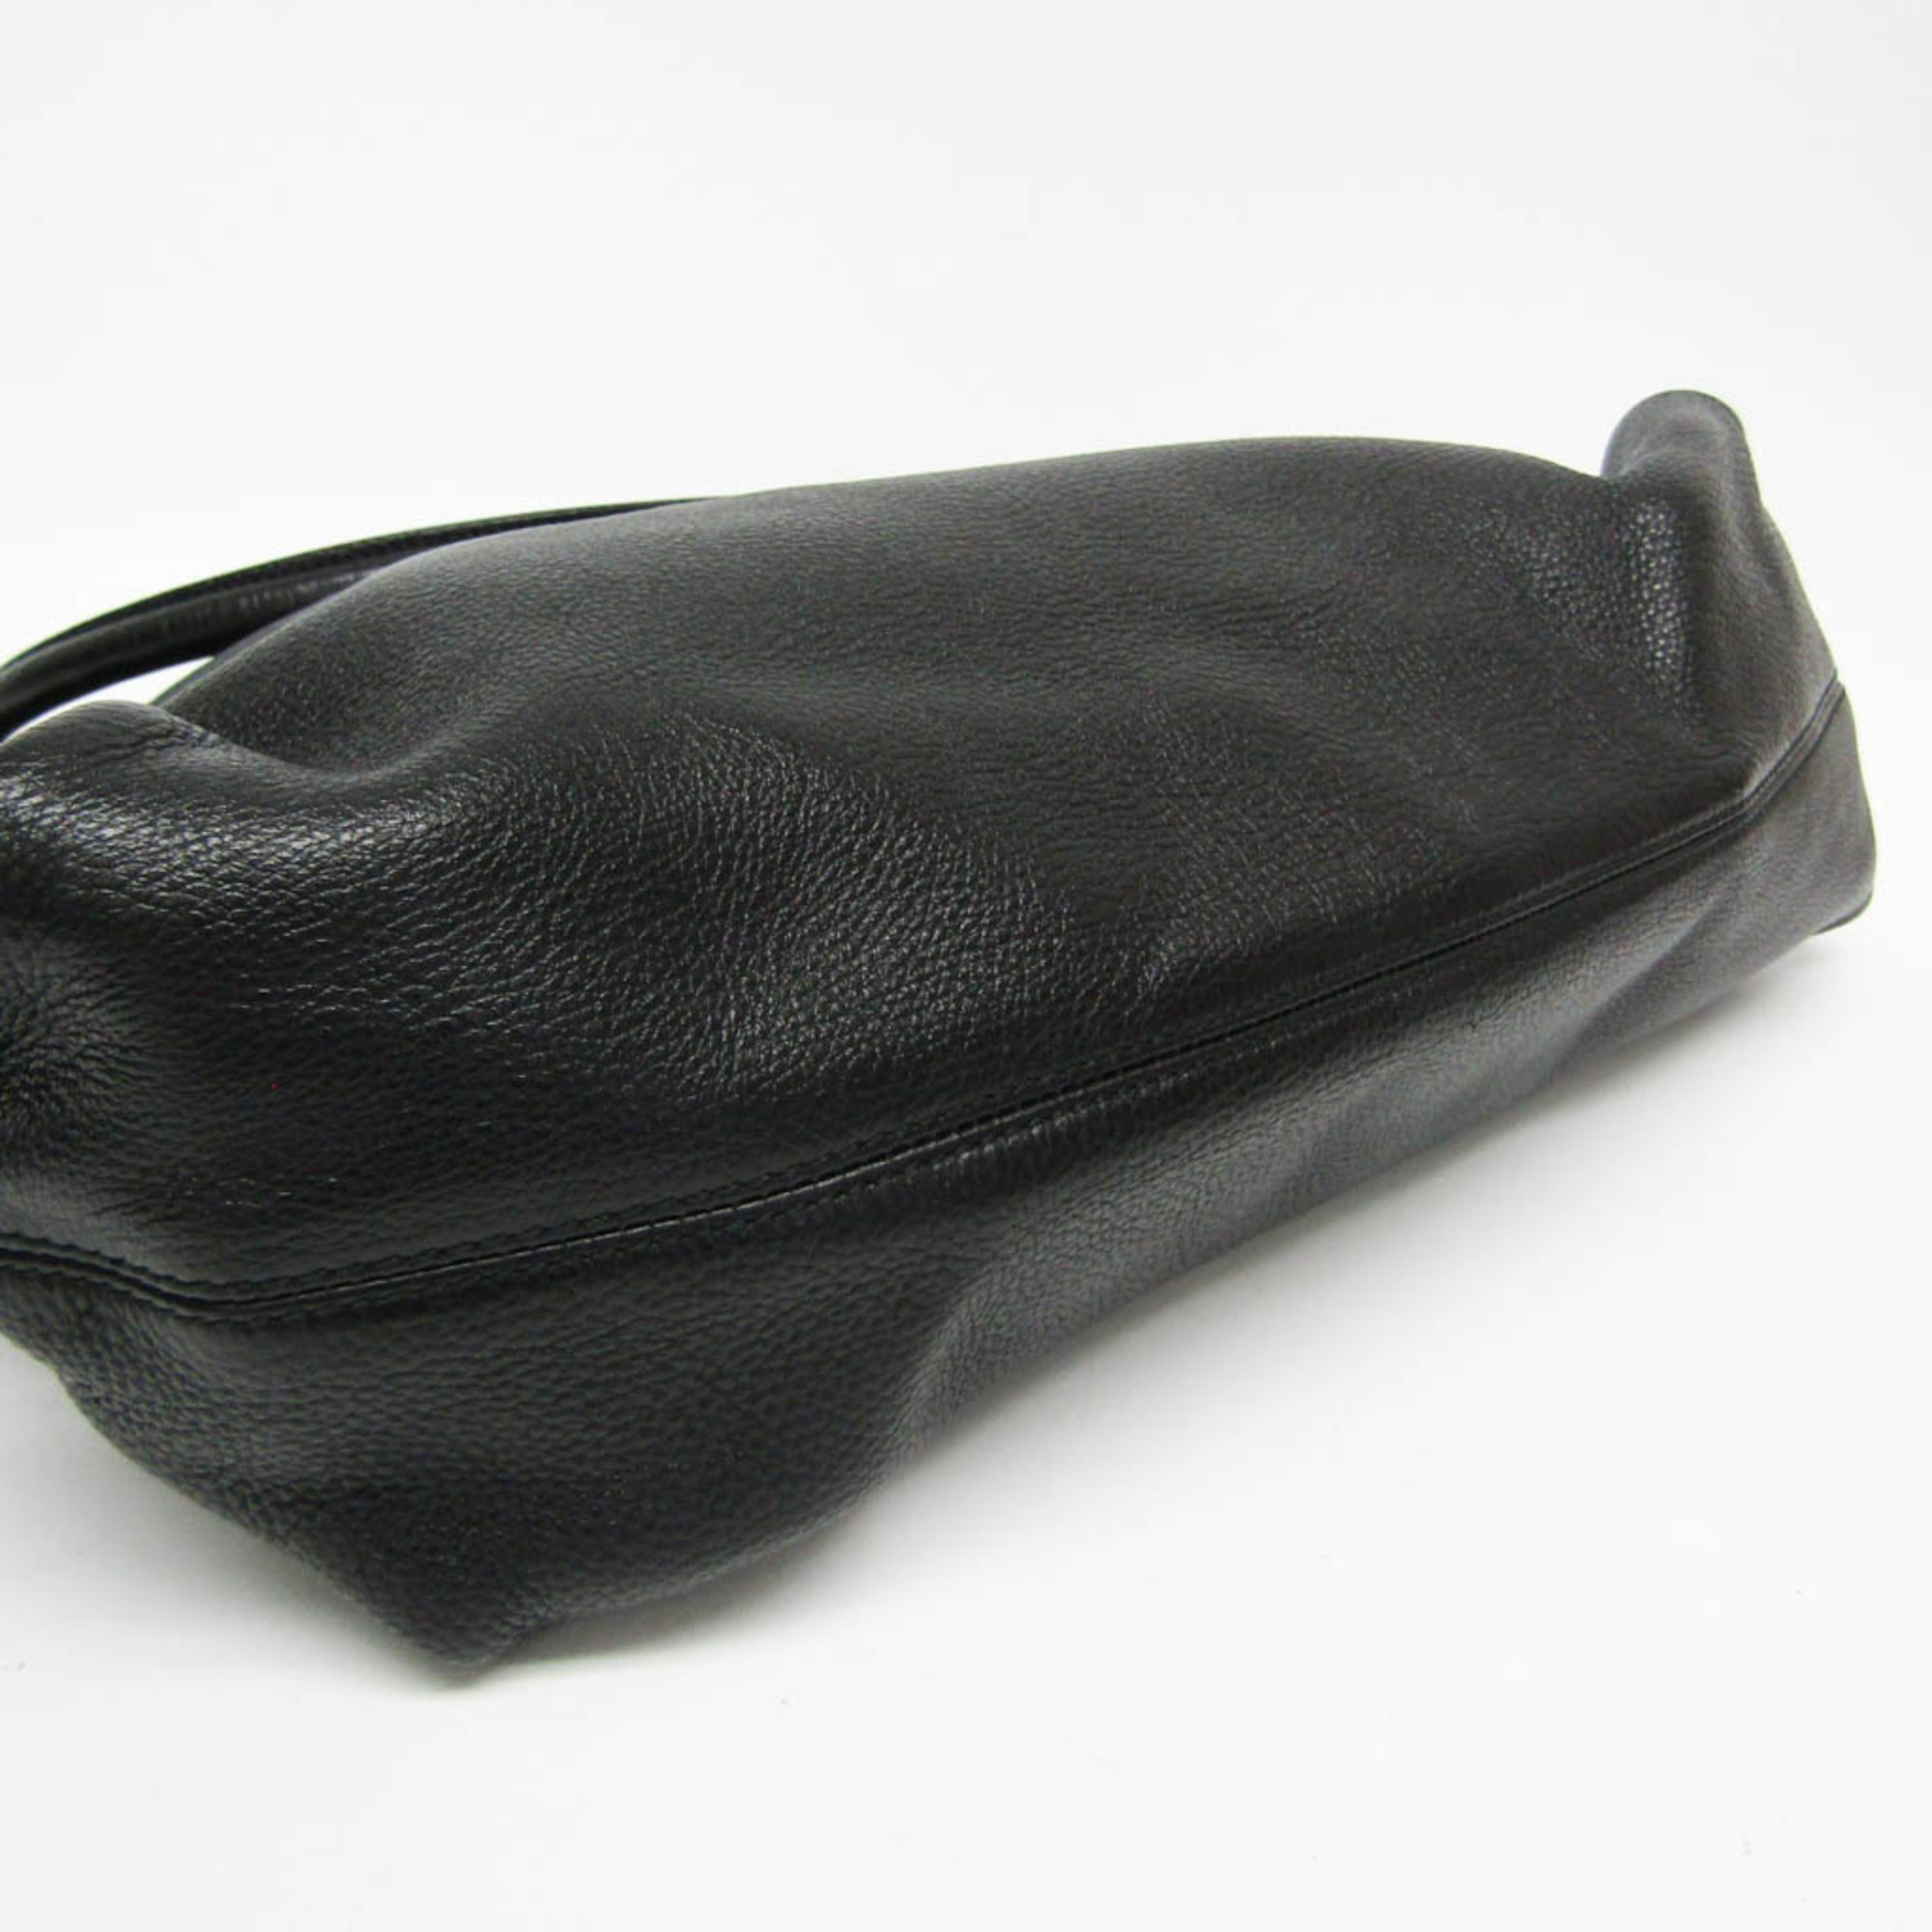 Salvatore Ferragamo Gancini EE-21 C676 Women's Leather Tote Bag Black